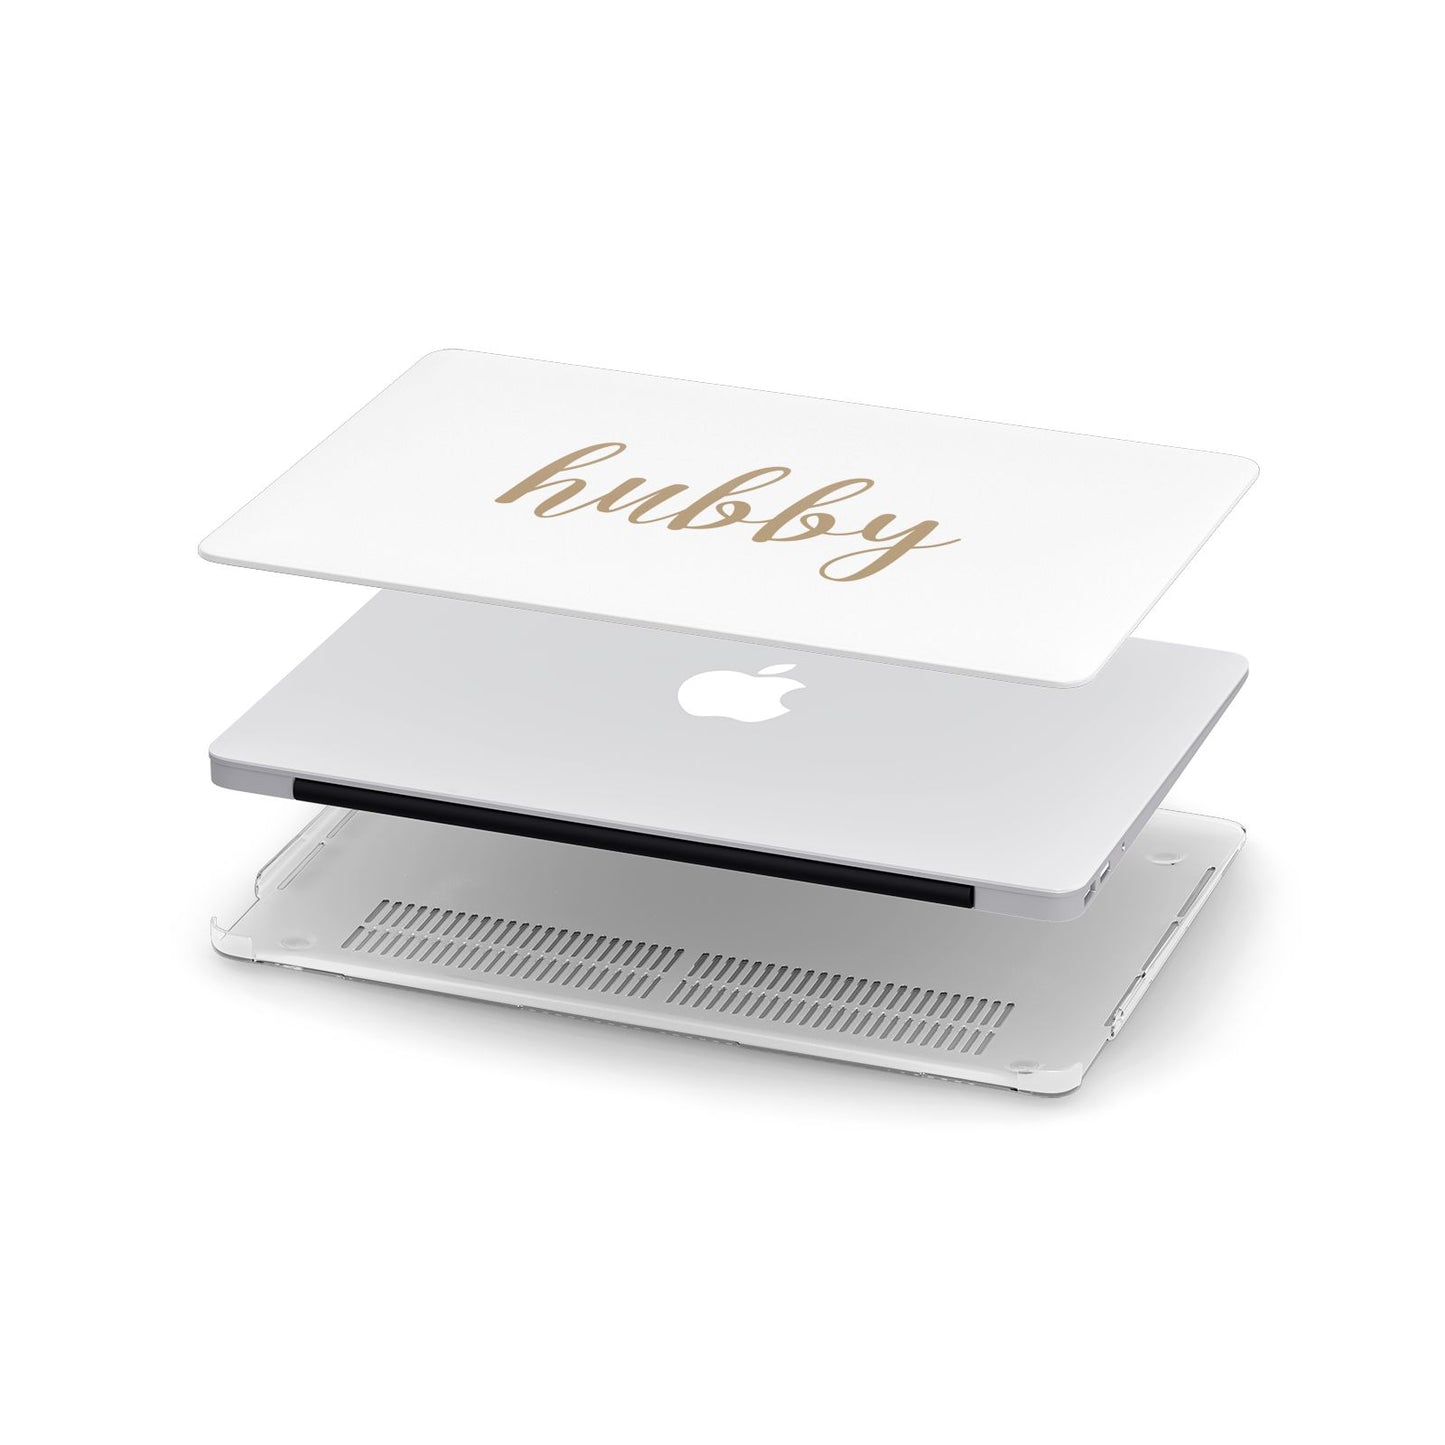 Hubby Apple MacBook Case in Detail